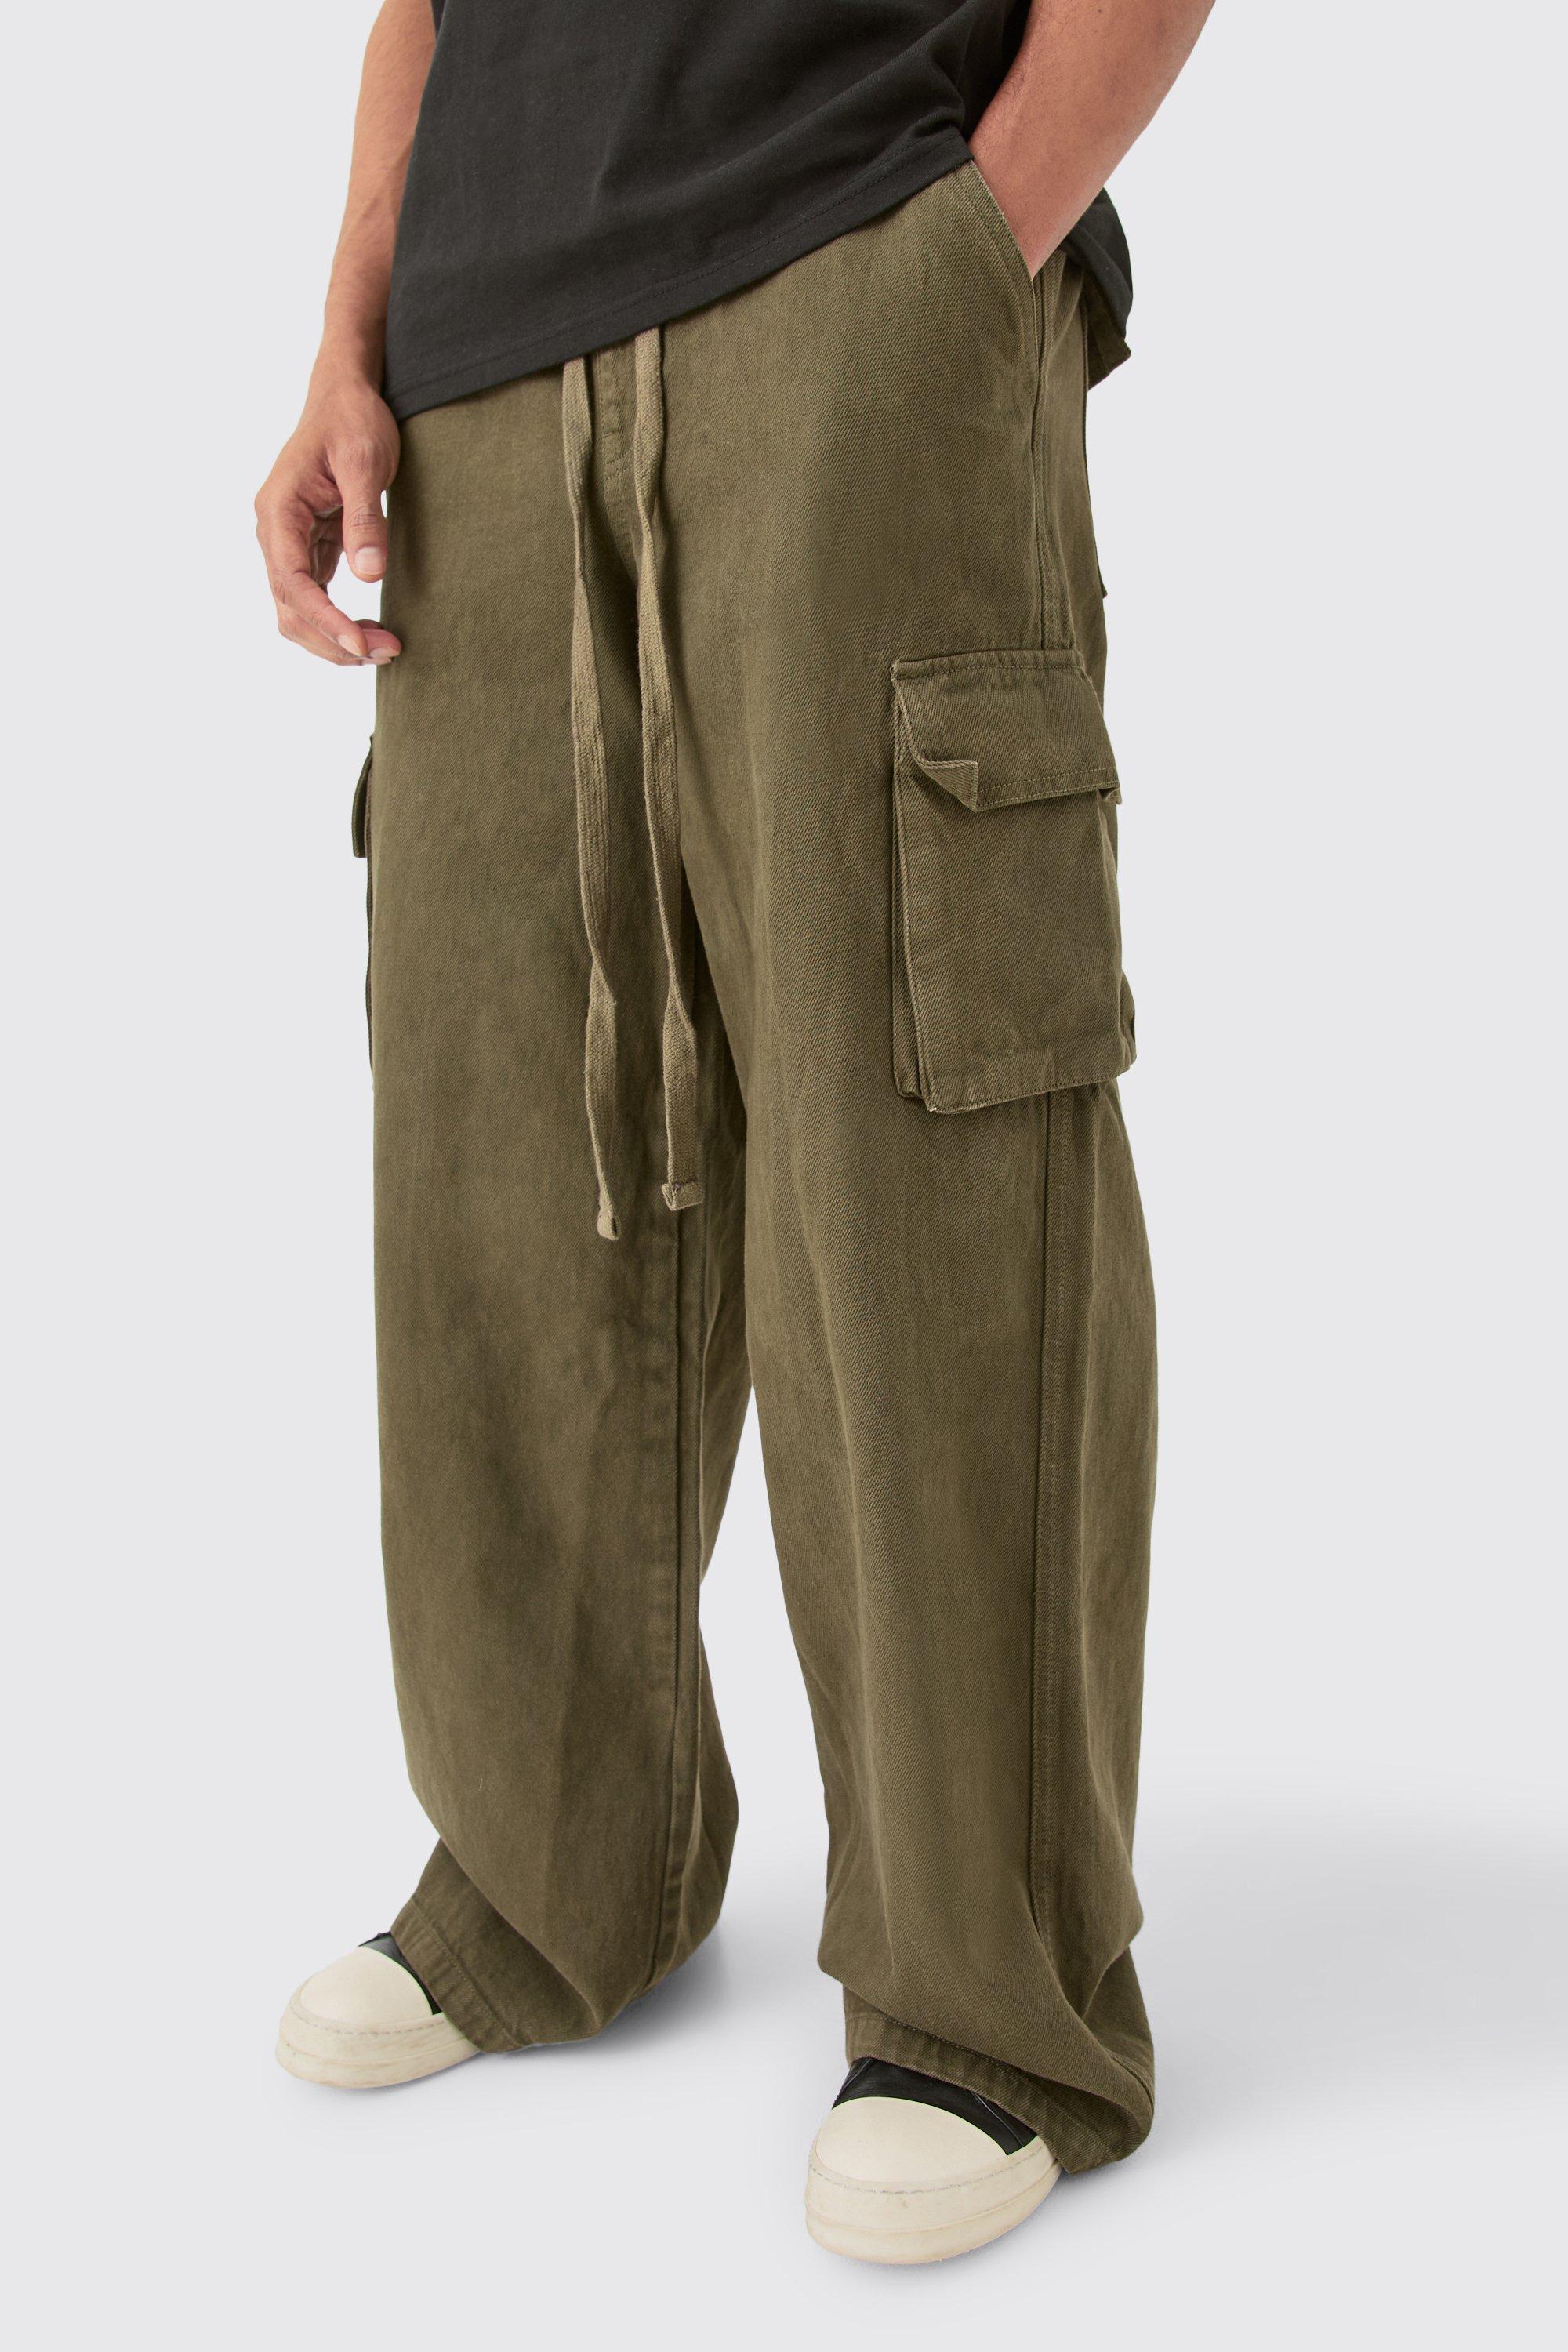 Boohoo Extreme Baggy Fit Toggle Cargo Pants In Khaki, Khaki